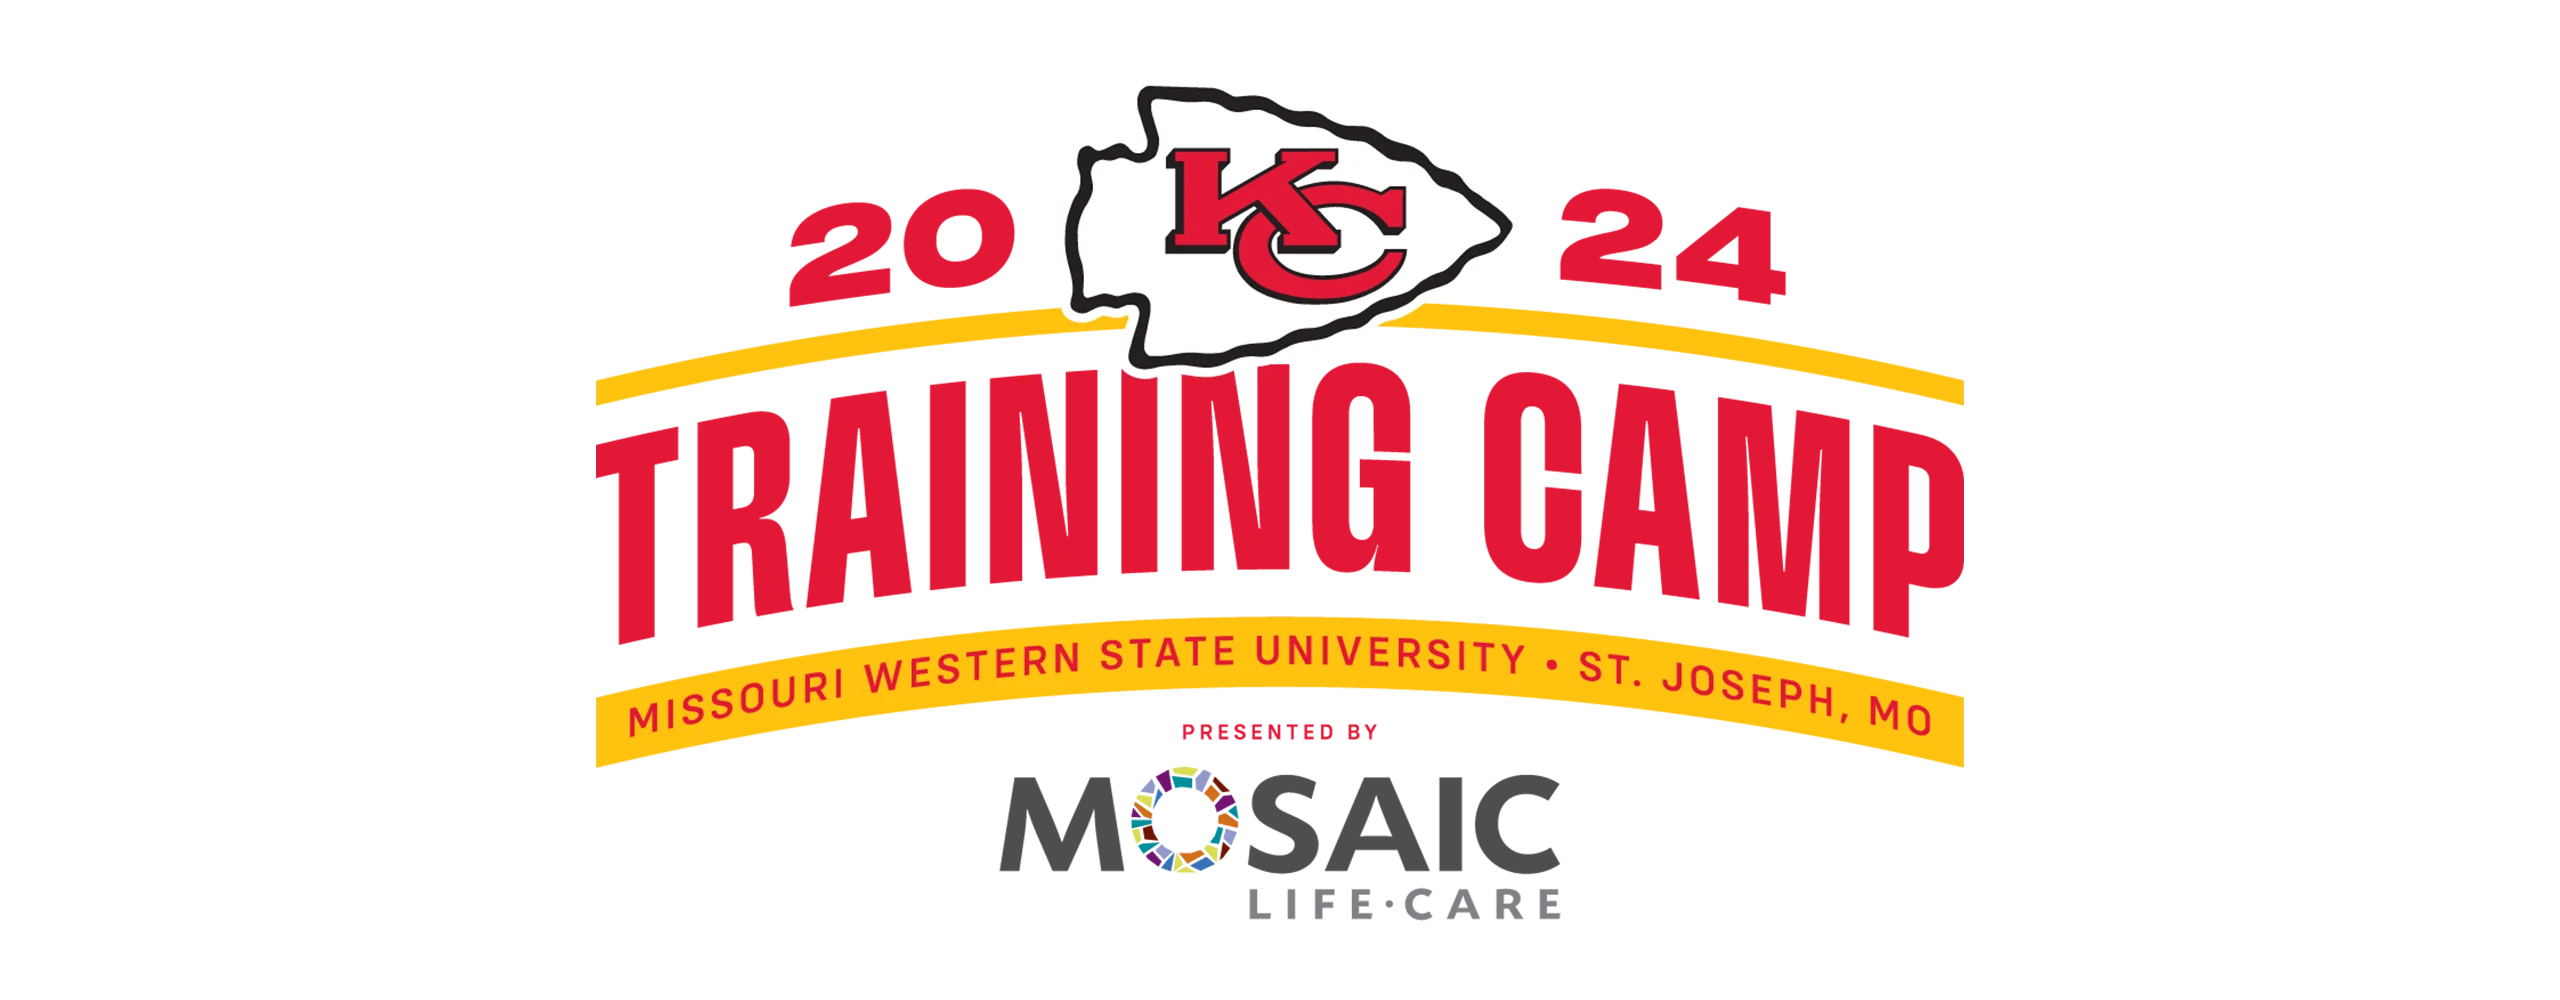 2024 training camp logo